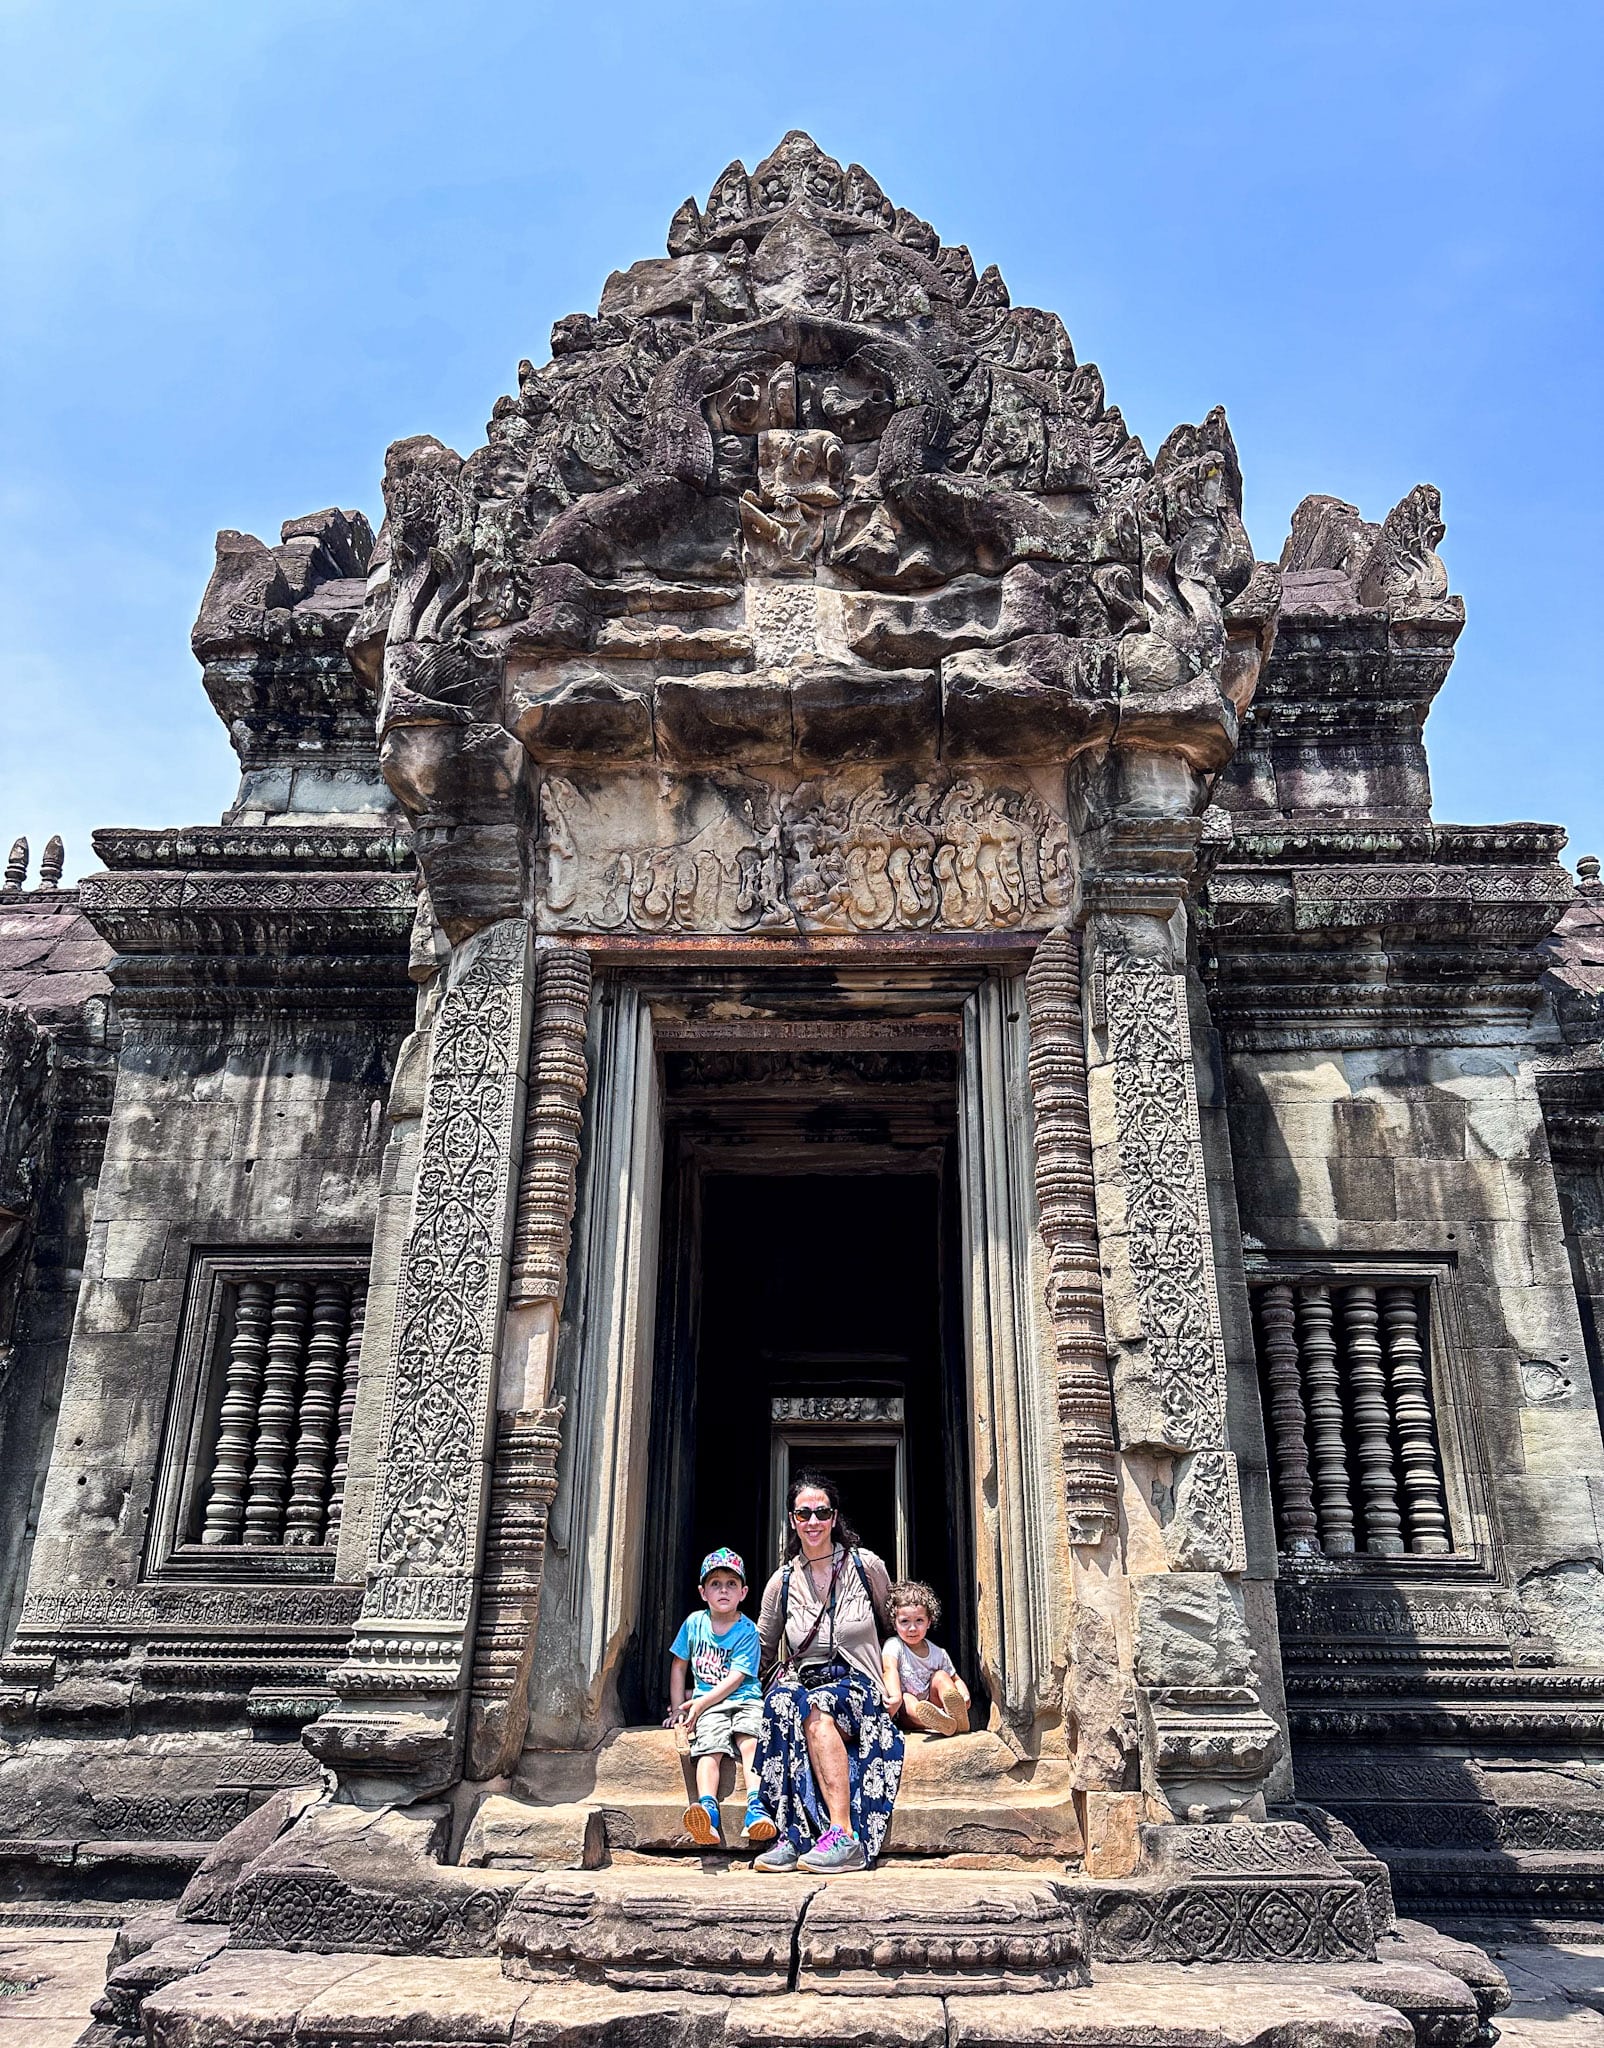 Rovine di Angkor